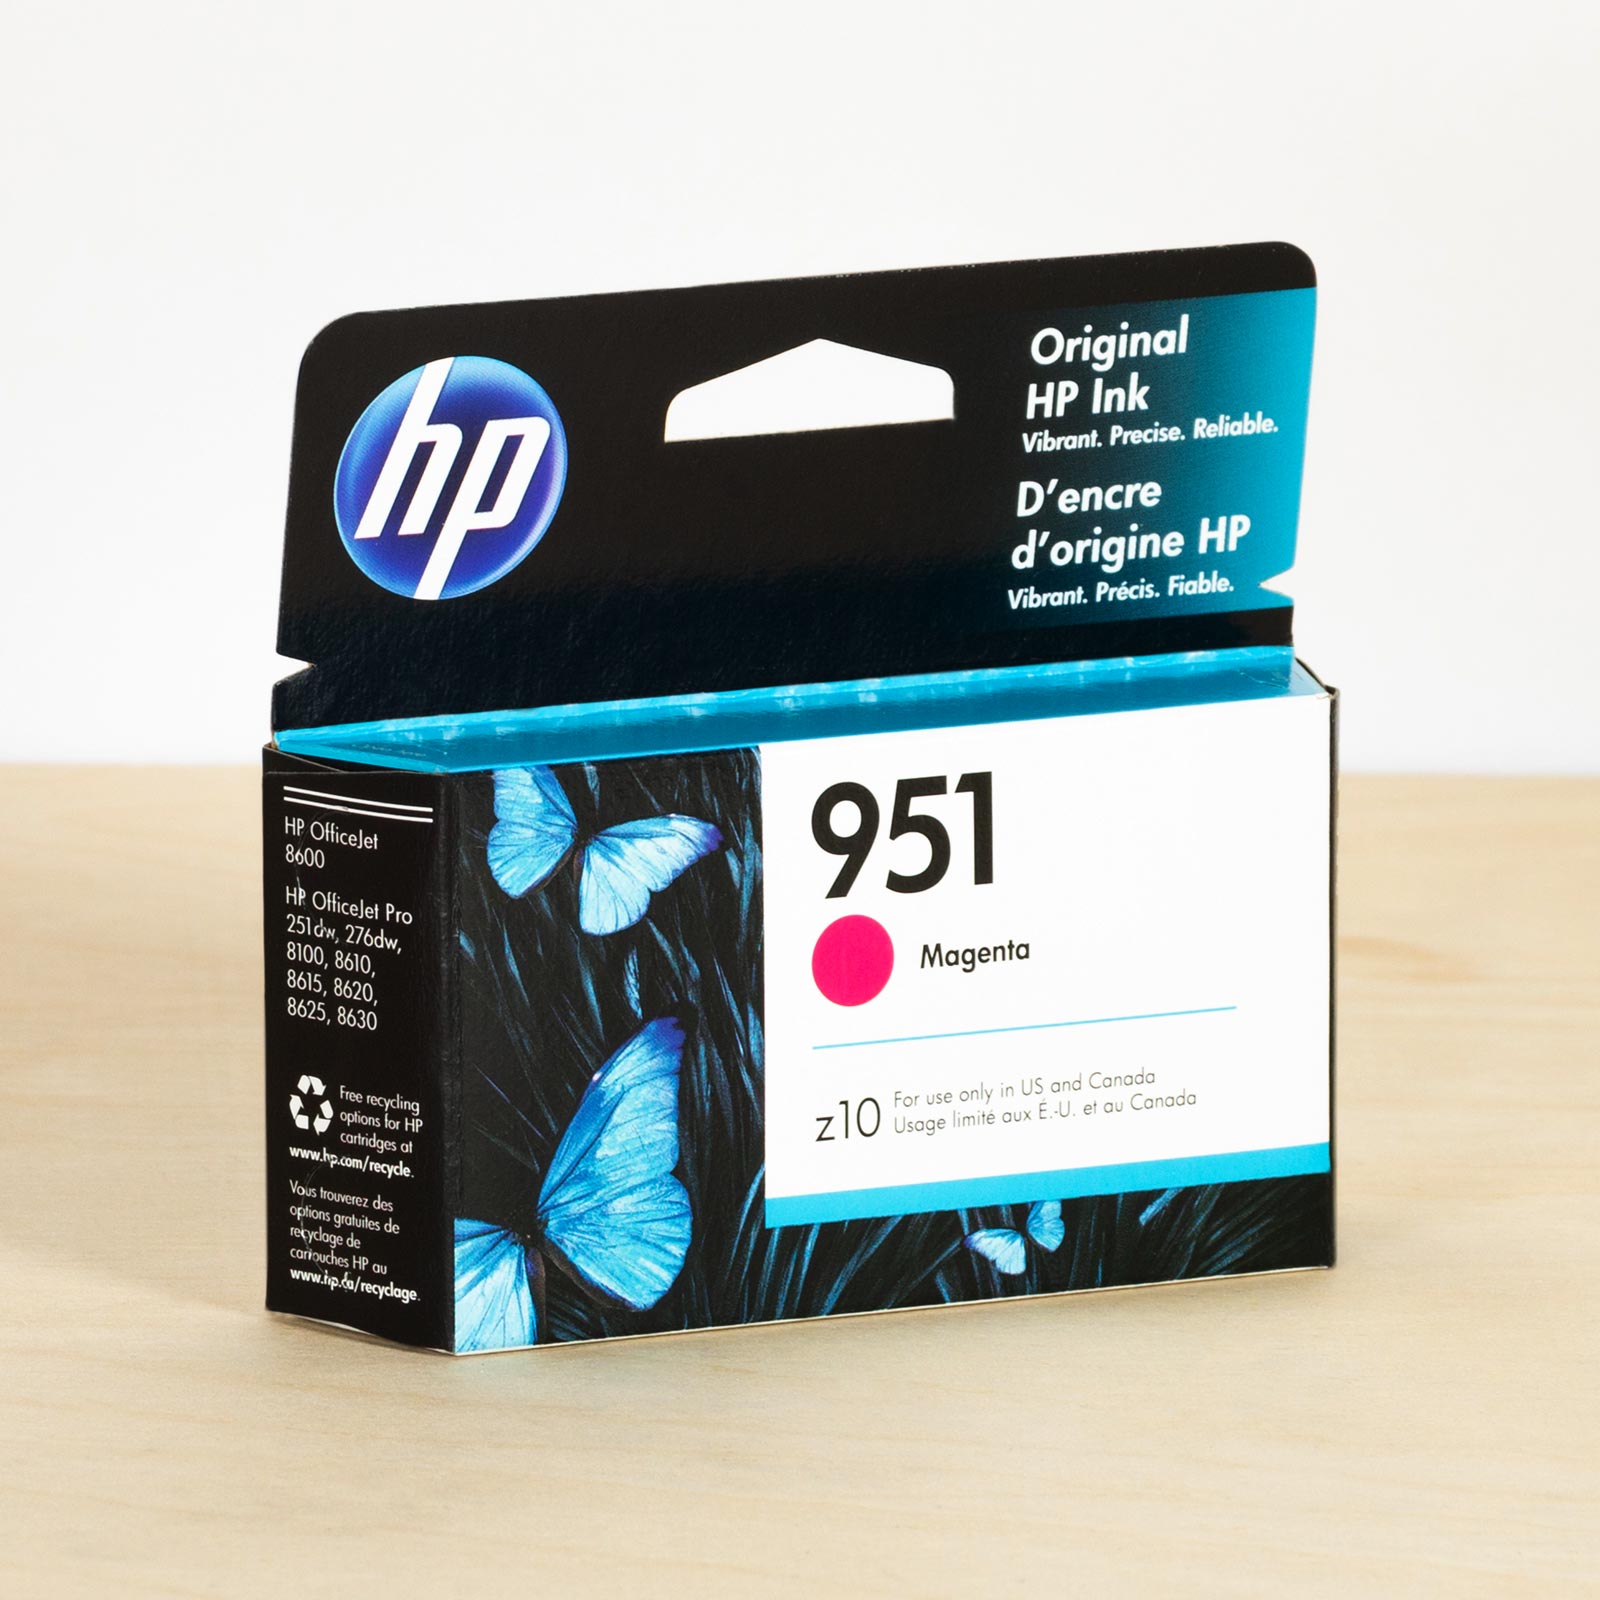 Hp ink-magenta-HP-OfficeJet-Pro-8620